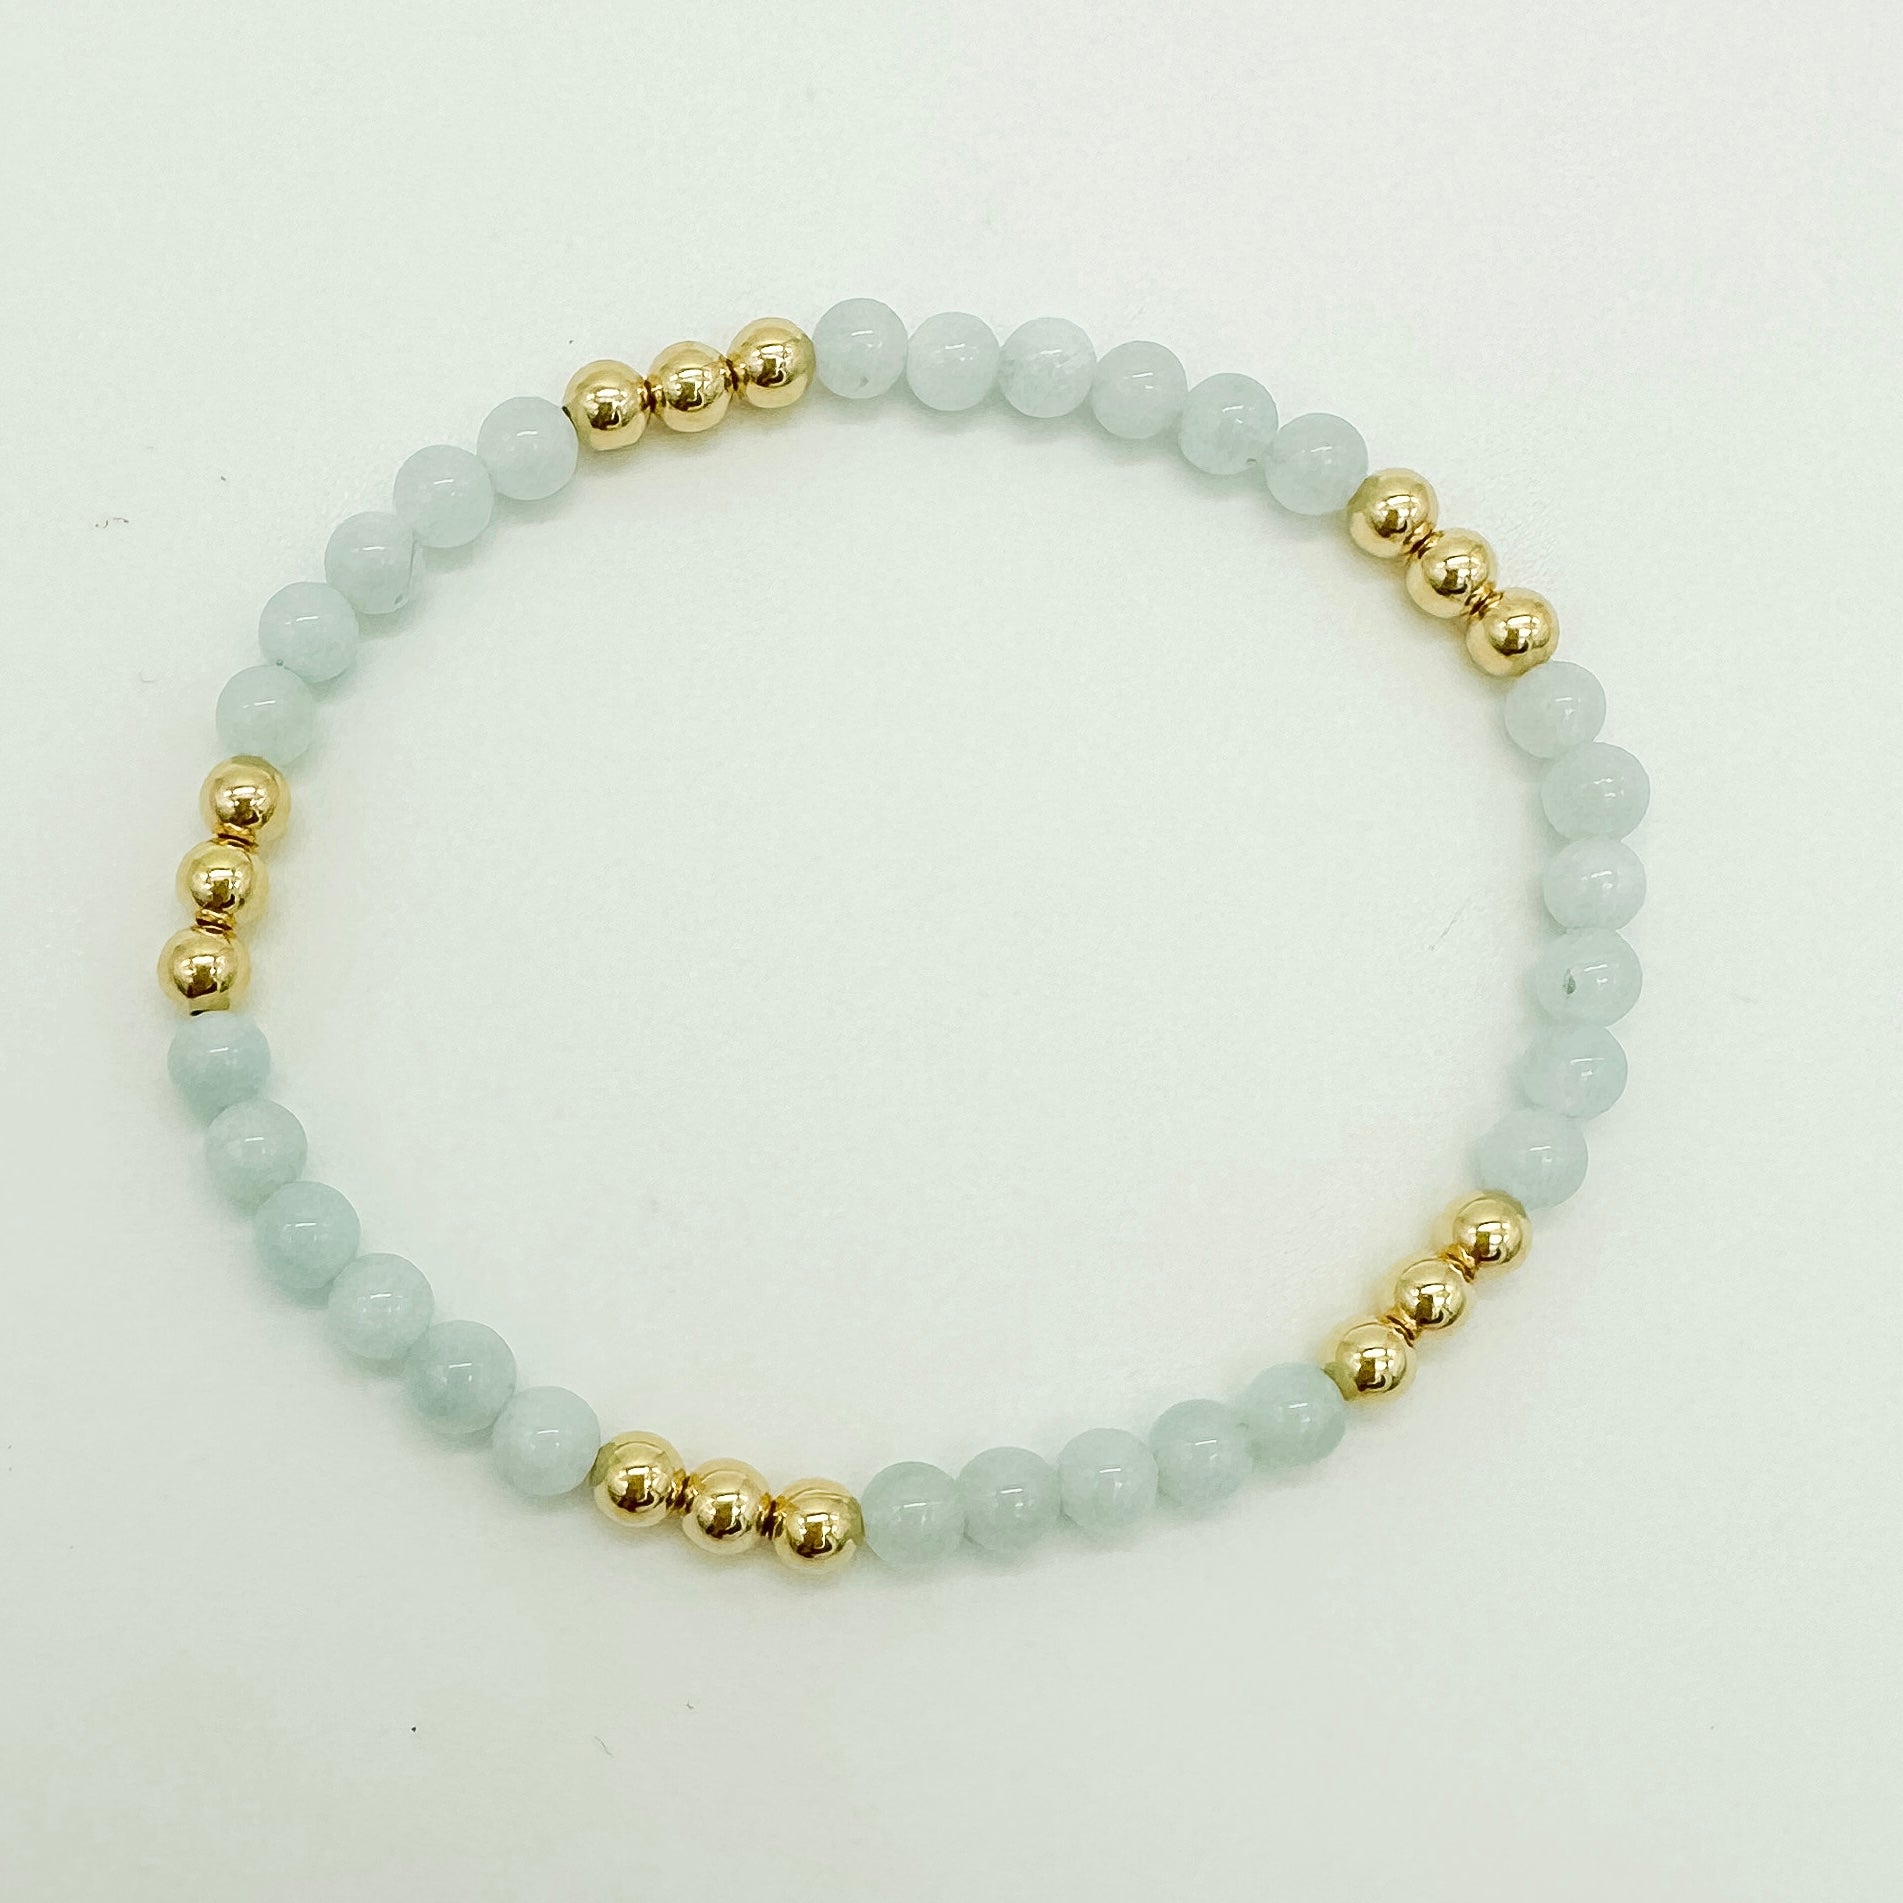 gemstone beaded bracelet / wholesale jewelry / hand-beaded bracelet / permanent jewelry supplier / aquamarine beaded bracelet